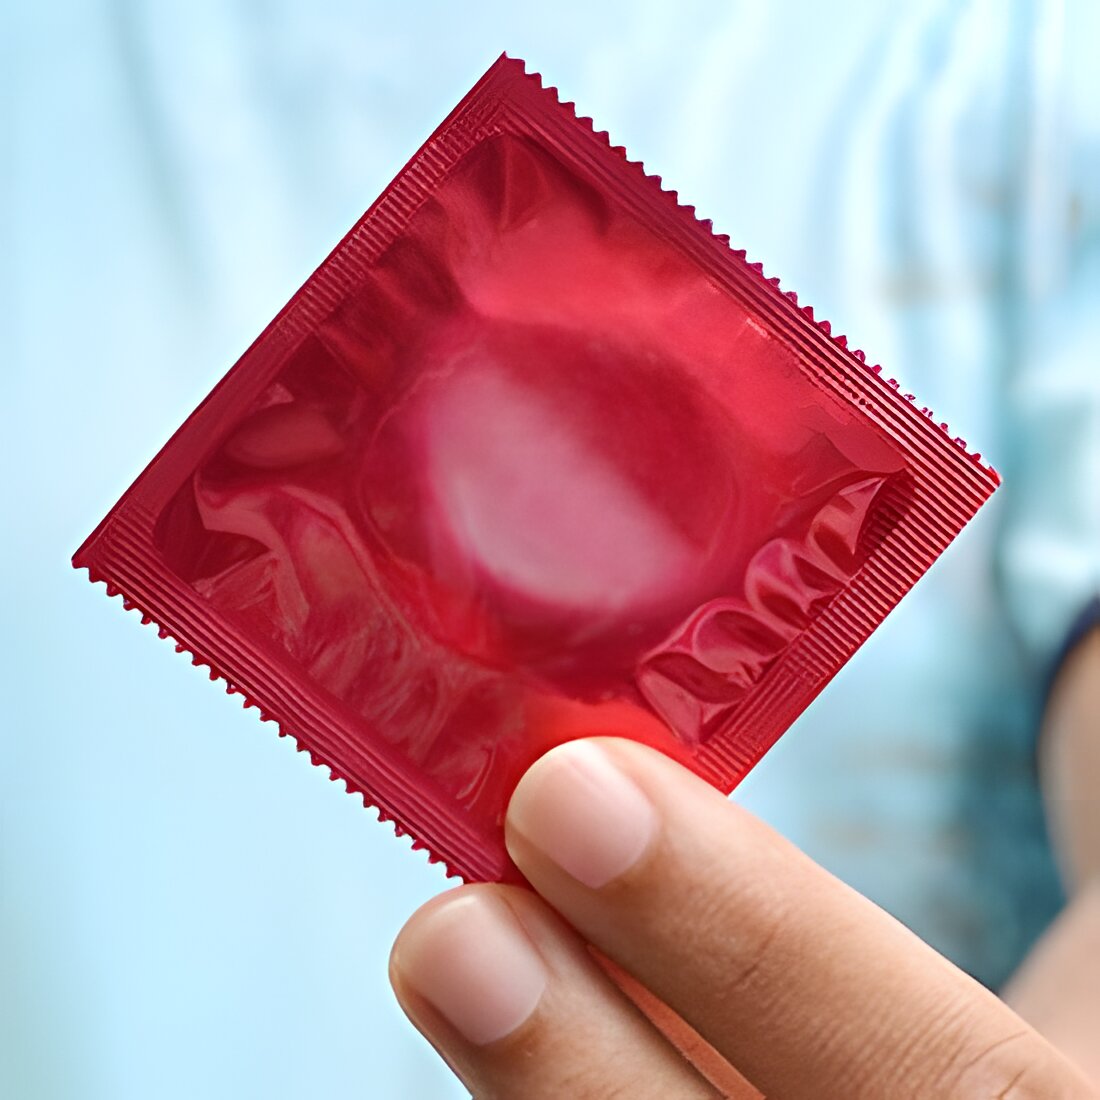 Free Condoms For Ohio Residents